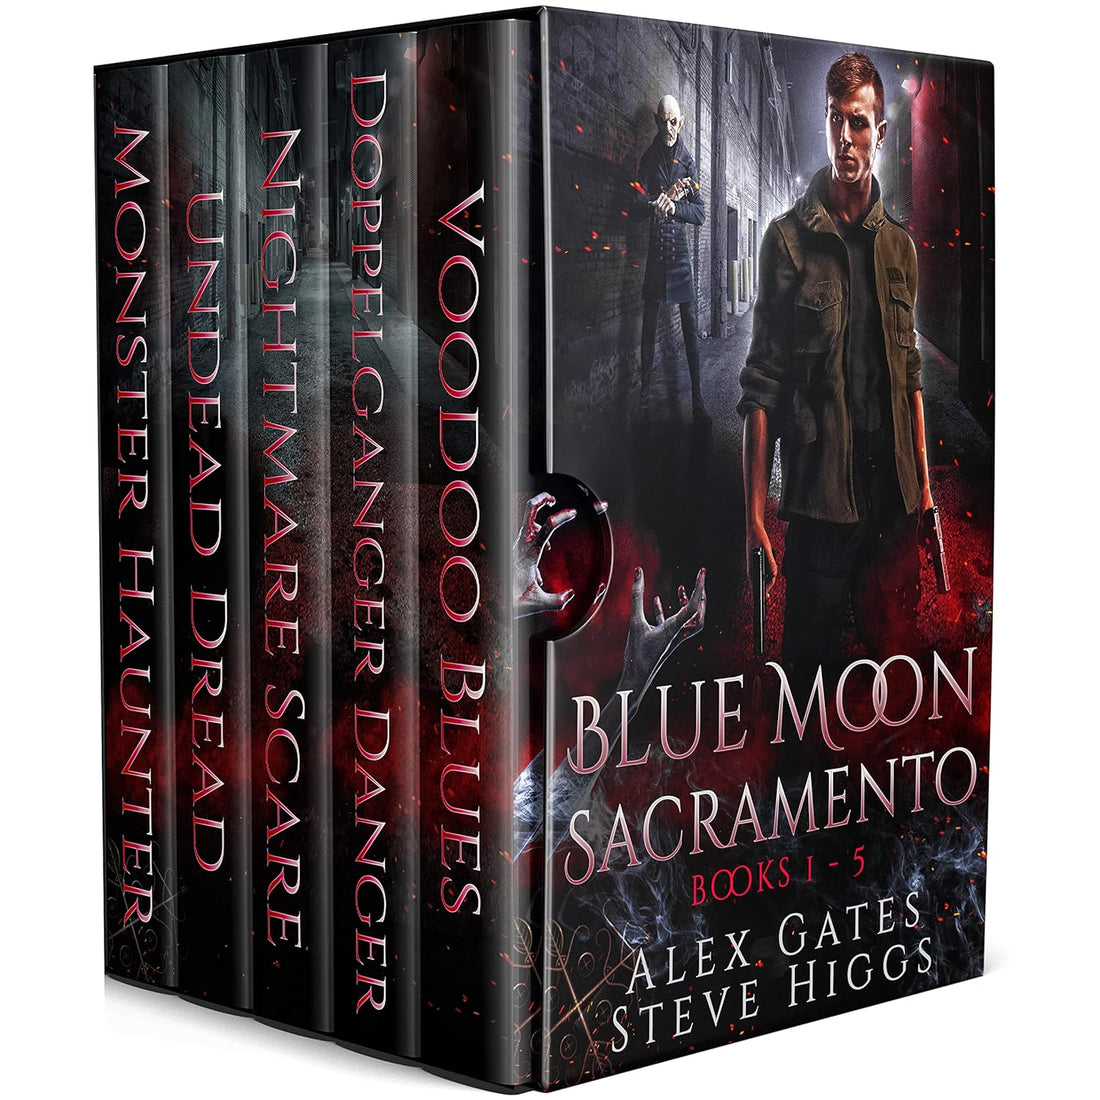 Doppelganger Danger : Blue Moon Sacramento Book 2